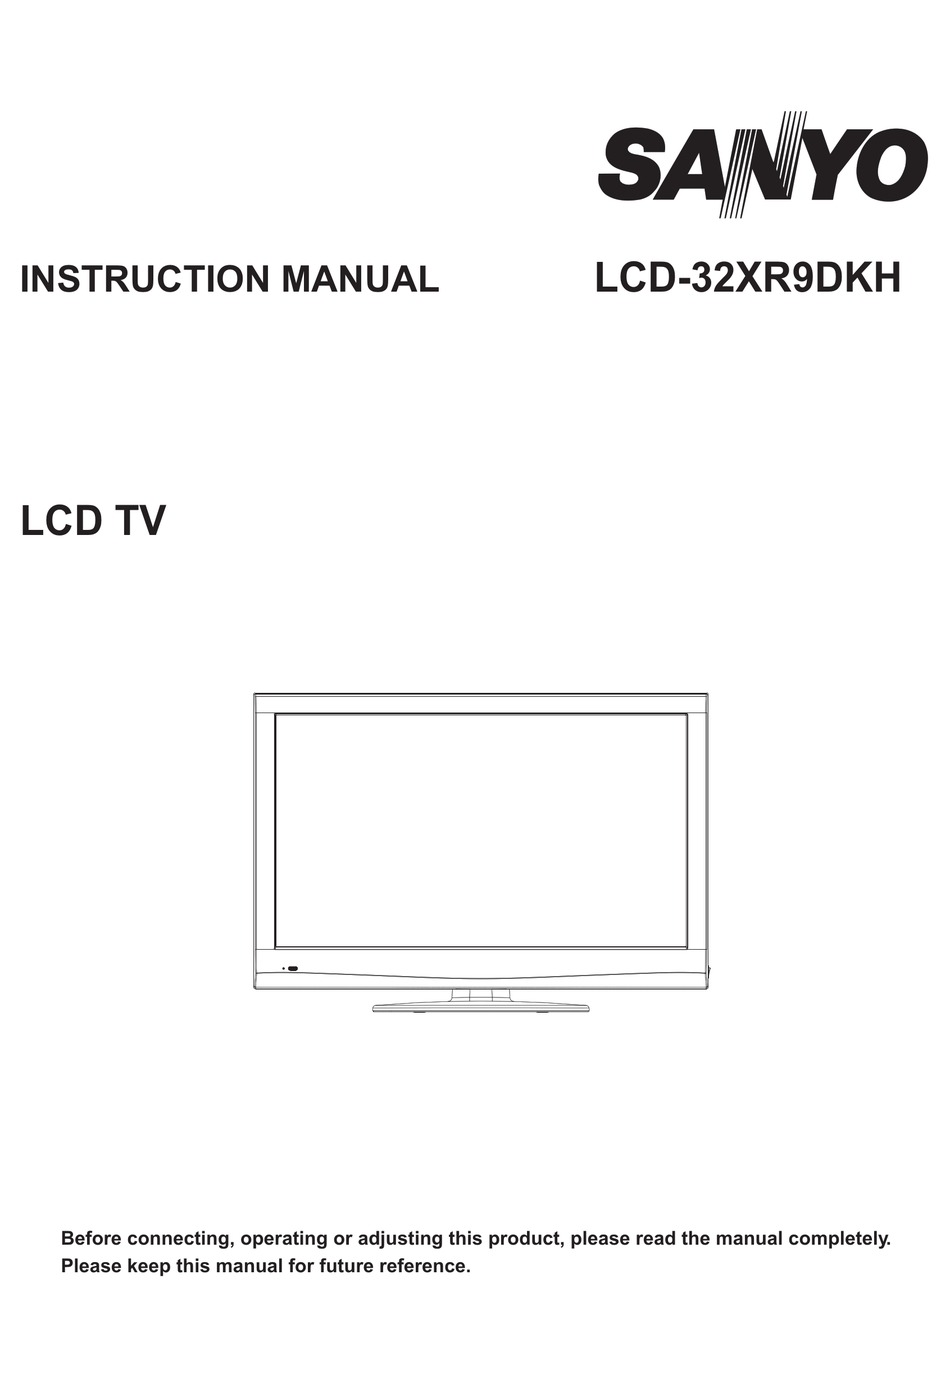 SANYO LCD-32XR9DKH INSTRUCTION MANUAL Pdf Download | ManualsLib